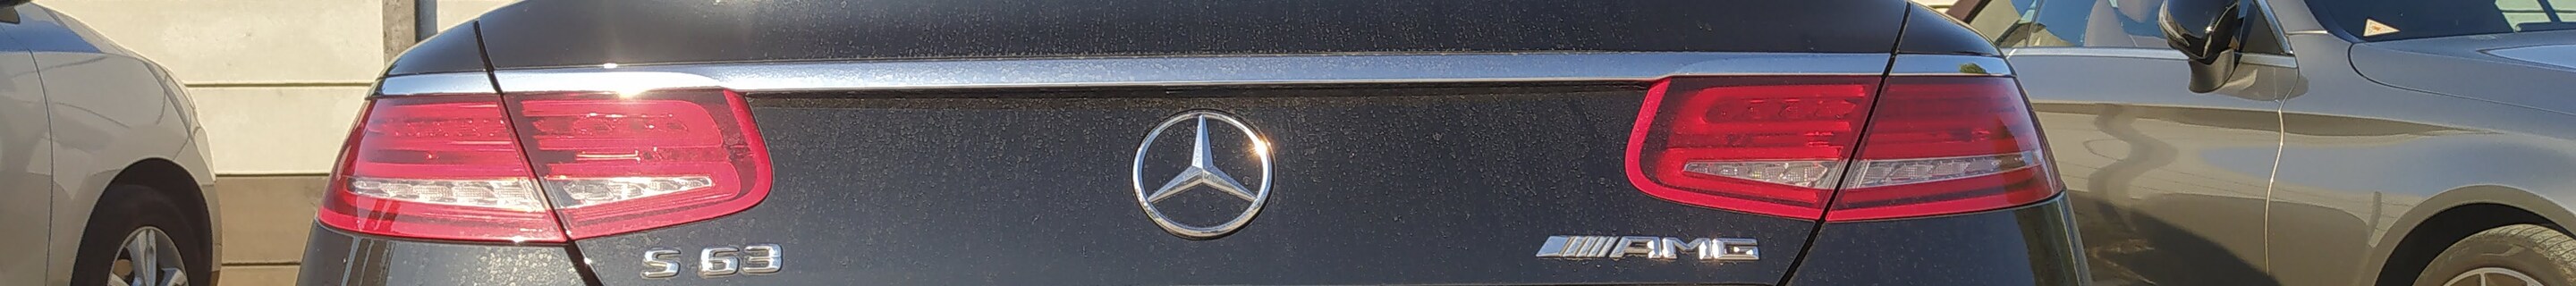 Mercedes-AMG S 63 Convertible A217